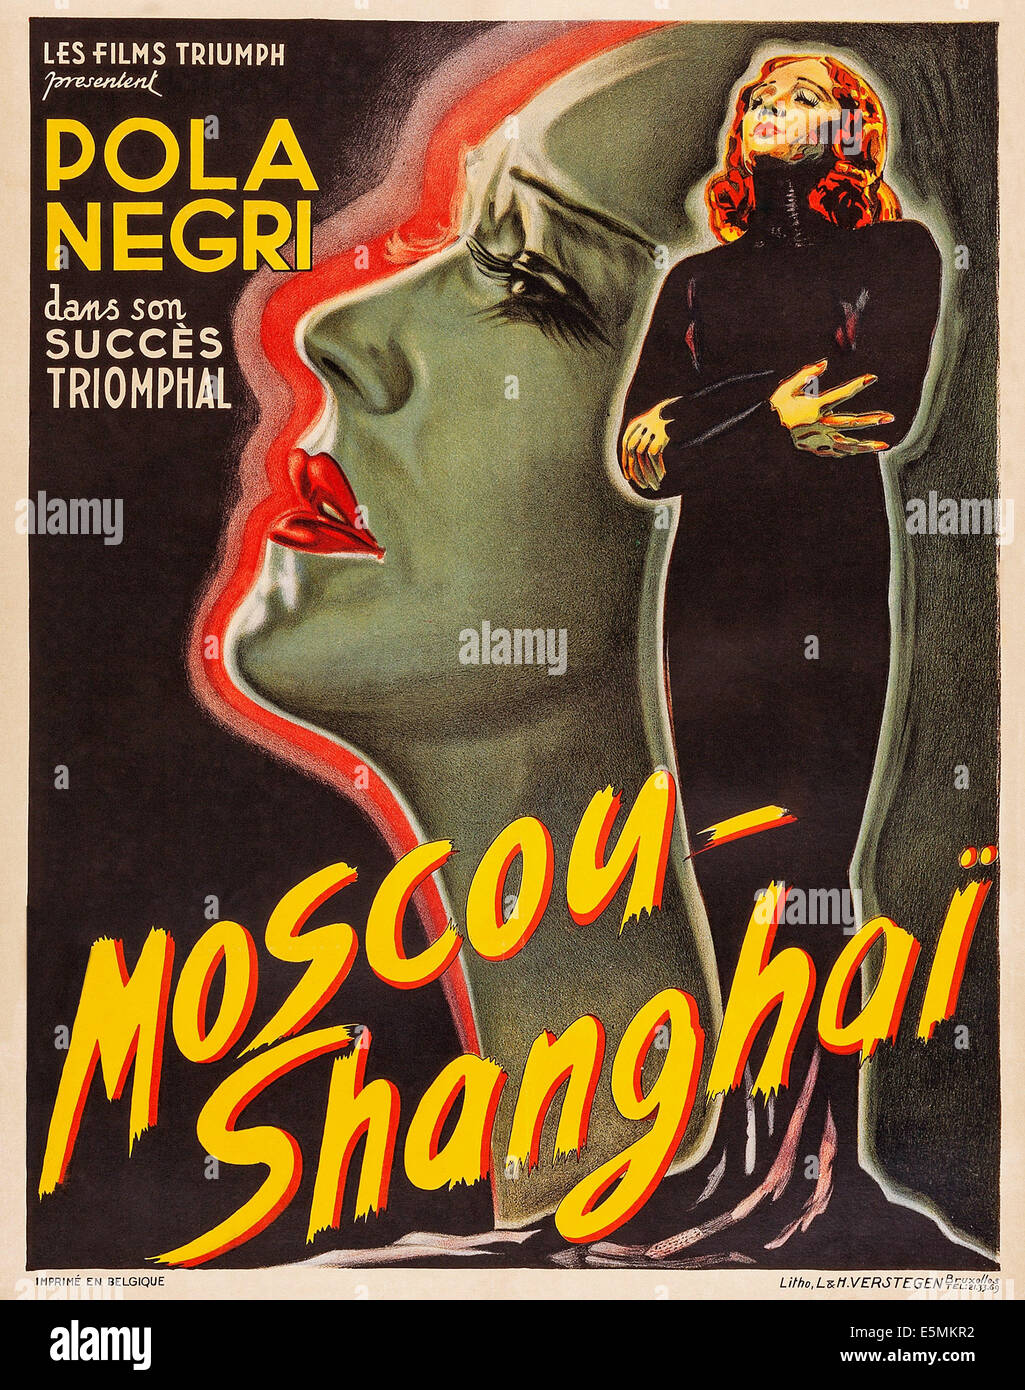 Mosca SHANGHAI, (aka DER WEG NACH SHANGHAI, aka MOSCOU-Shanghai), manifesto francese arte, Pola Negri, 1936 Foto Stock